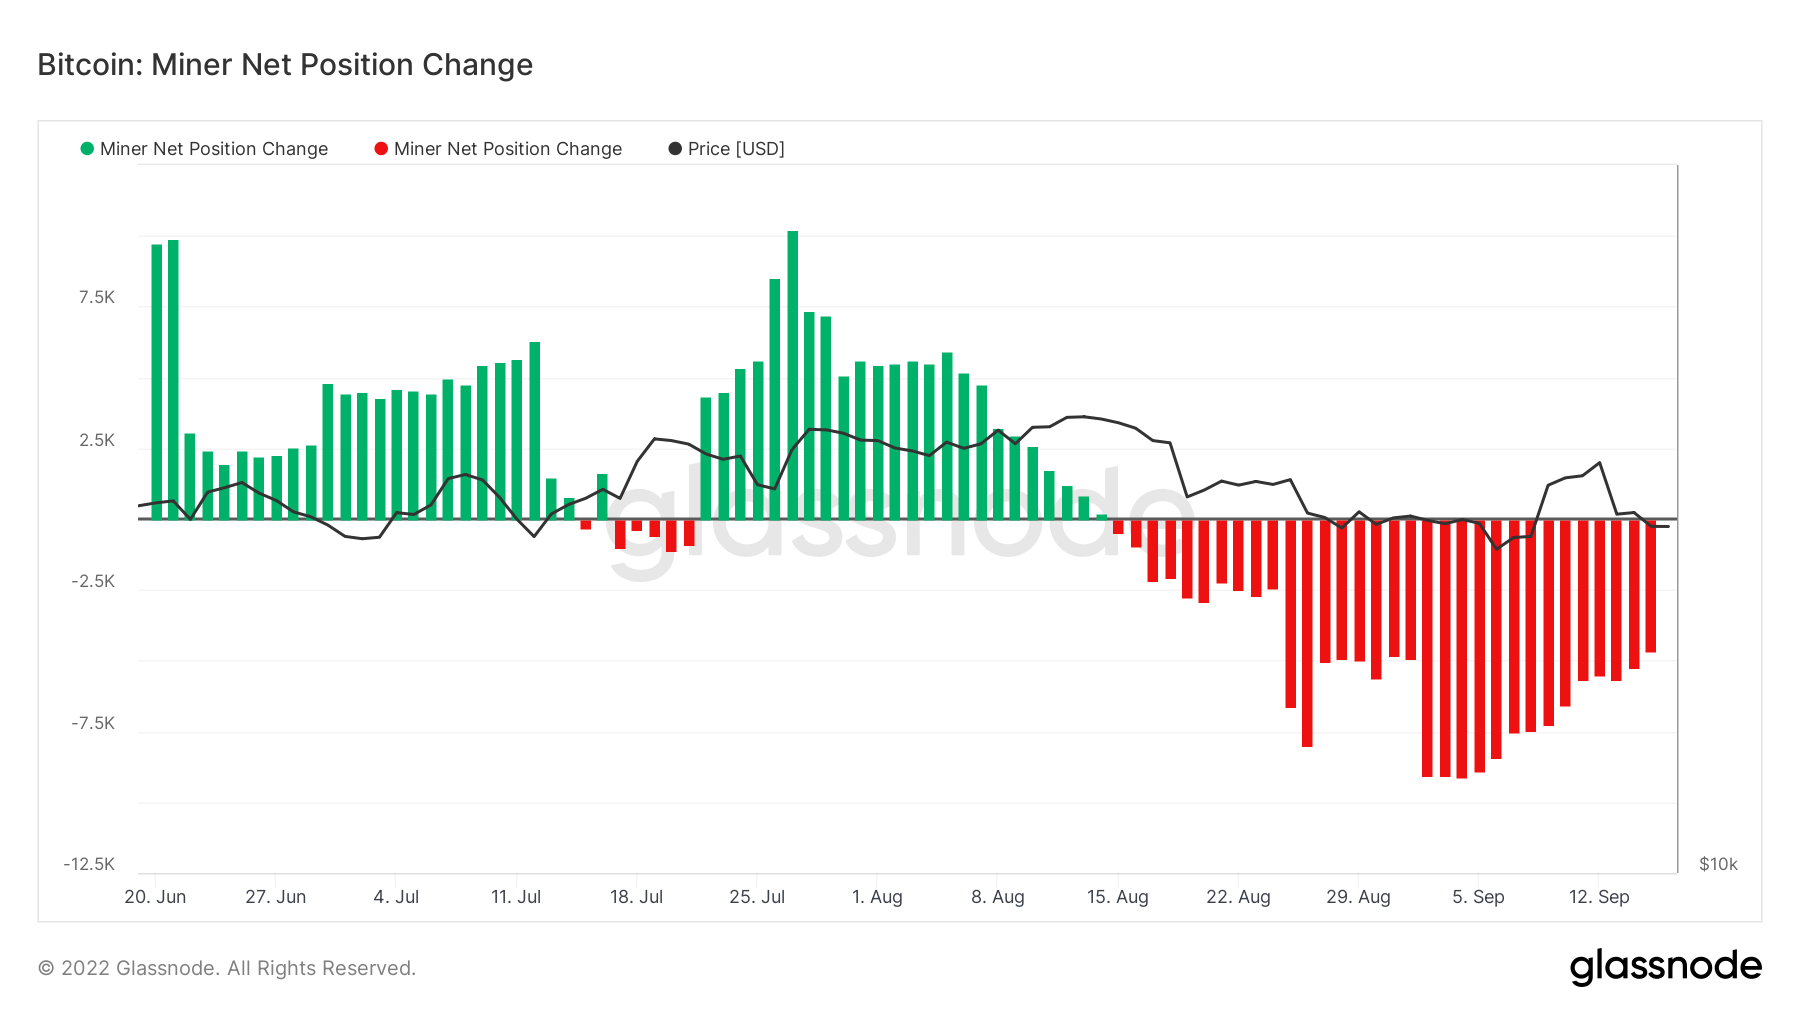 Bitcoin miner net position change chart. Source: Glassnode